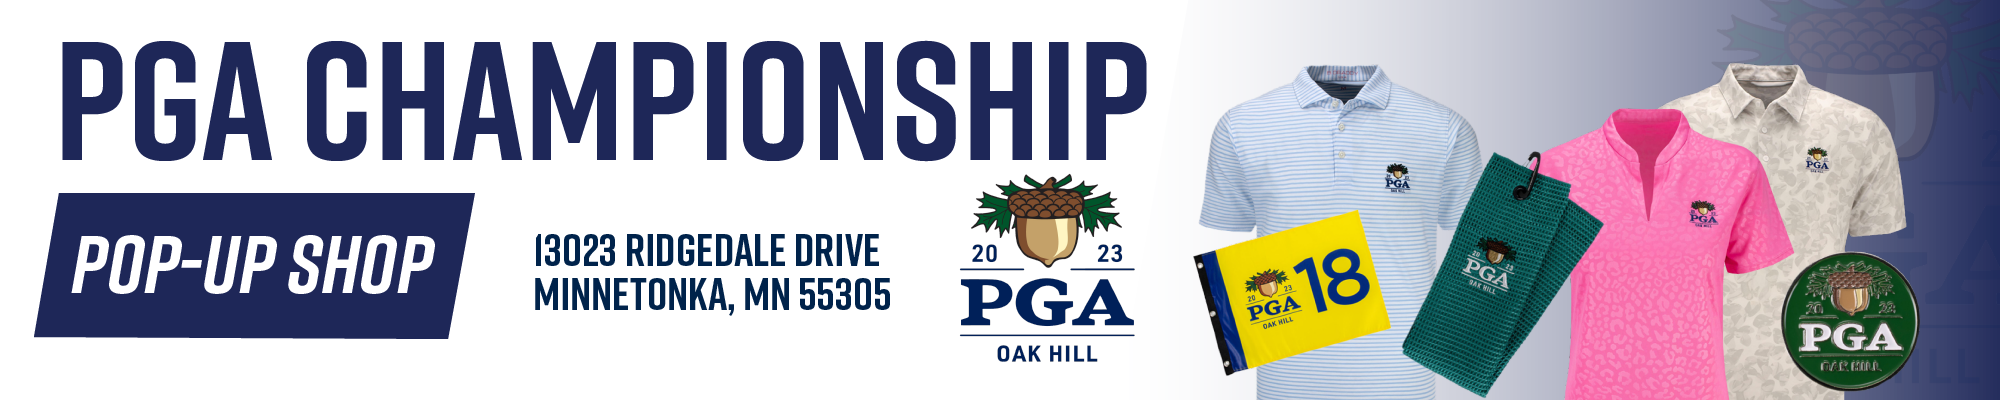 PGA Championship | Pop Up Shop | 13023 Ridgedale Drive, Minnetonka, MN 55305